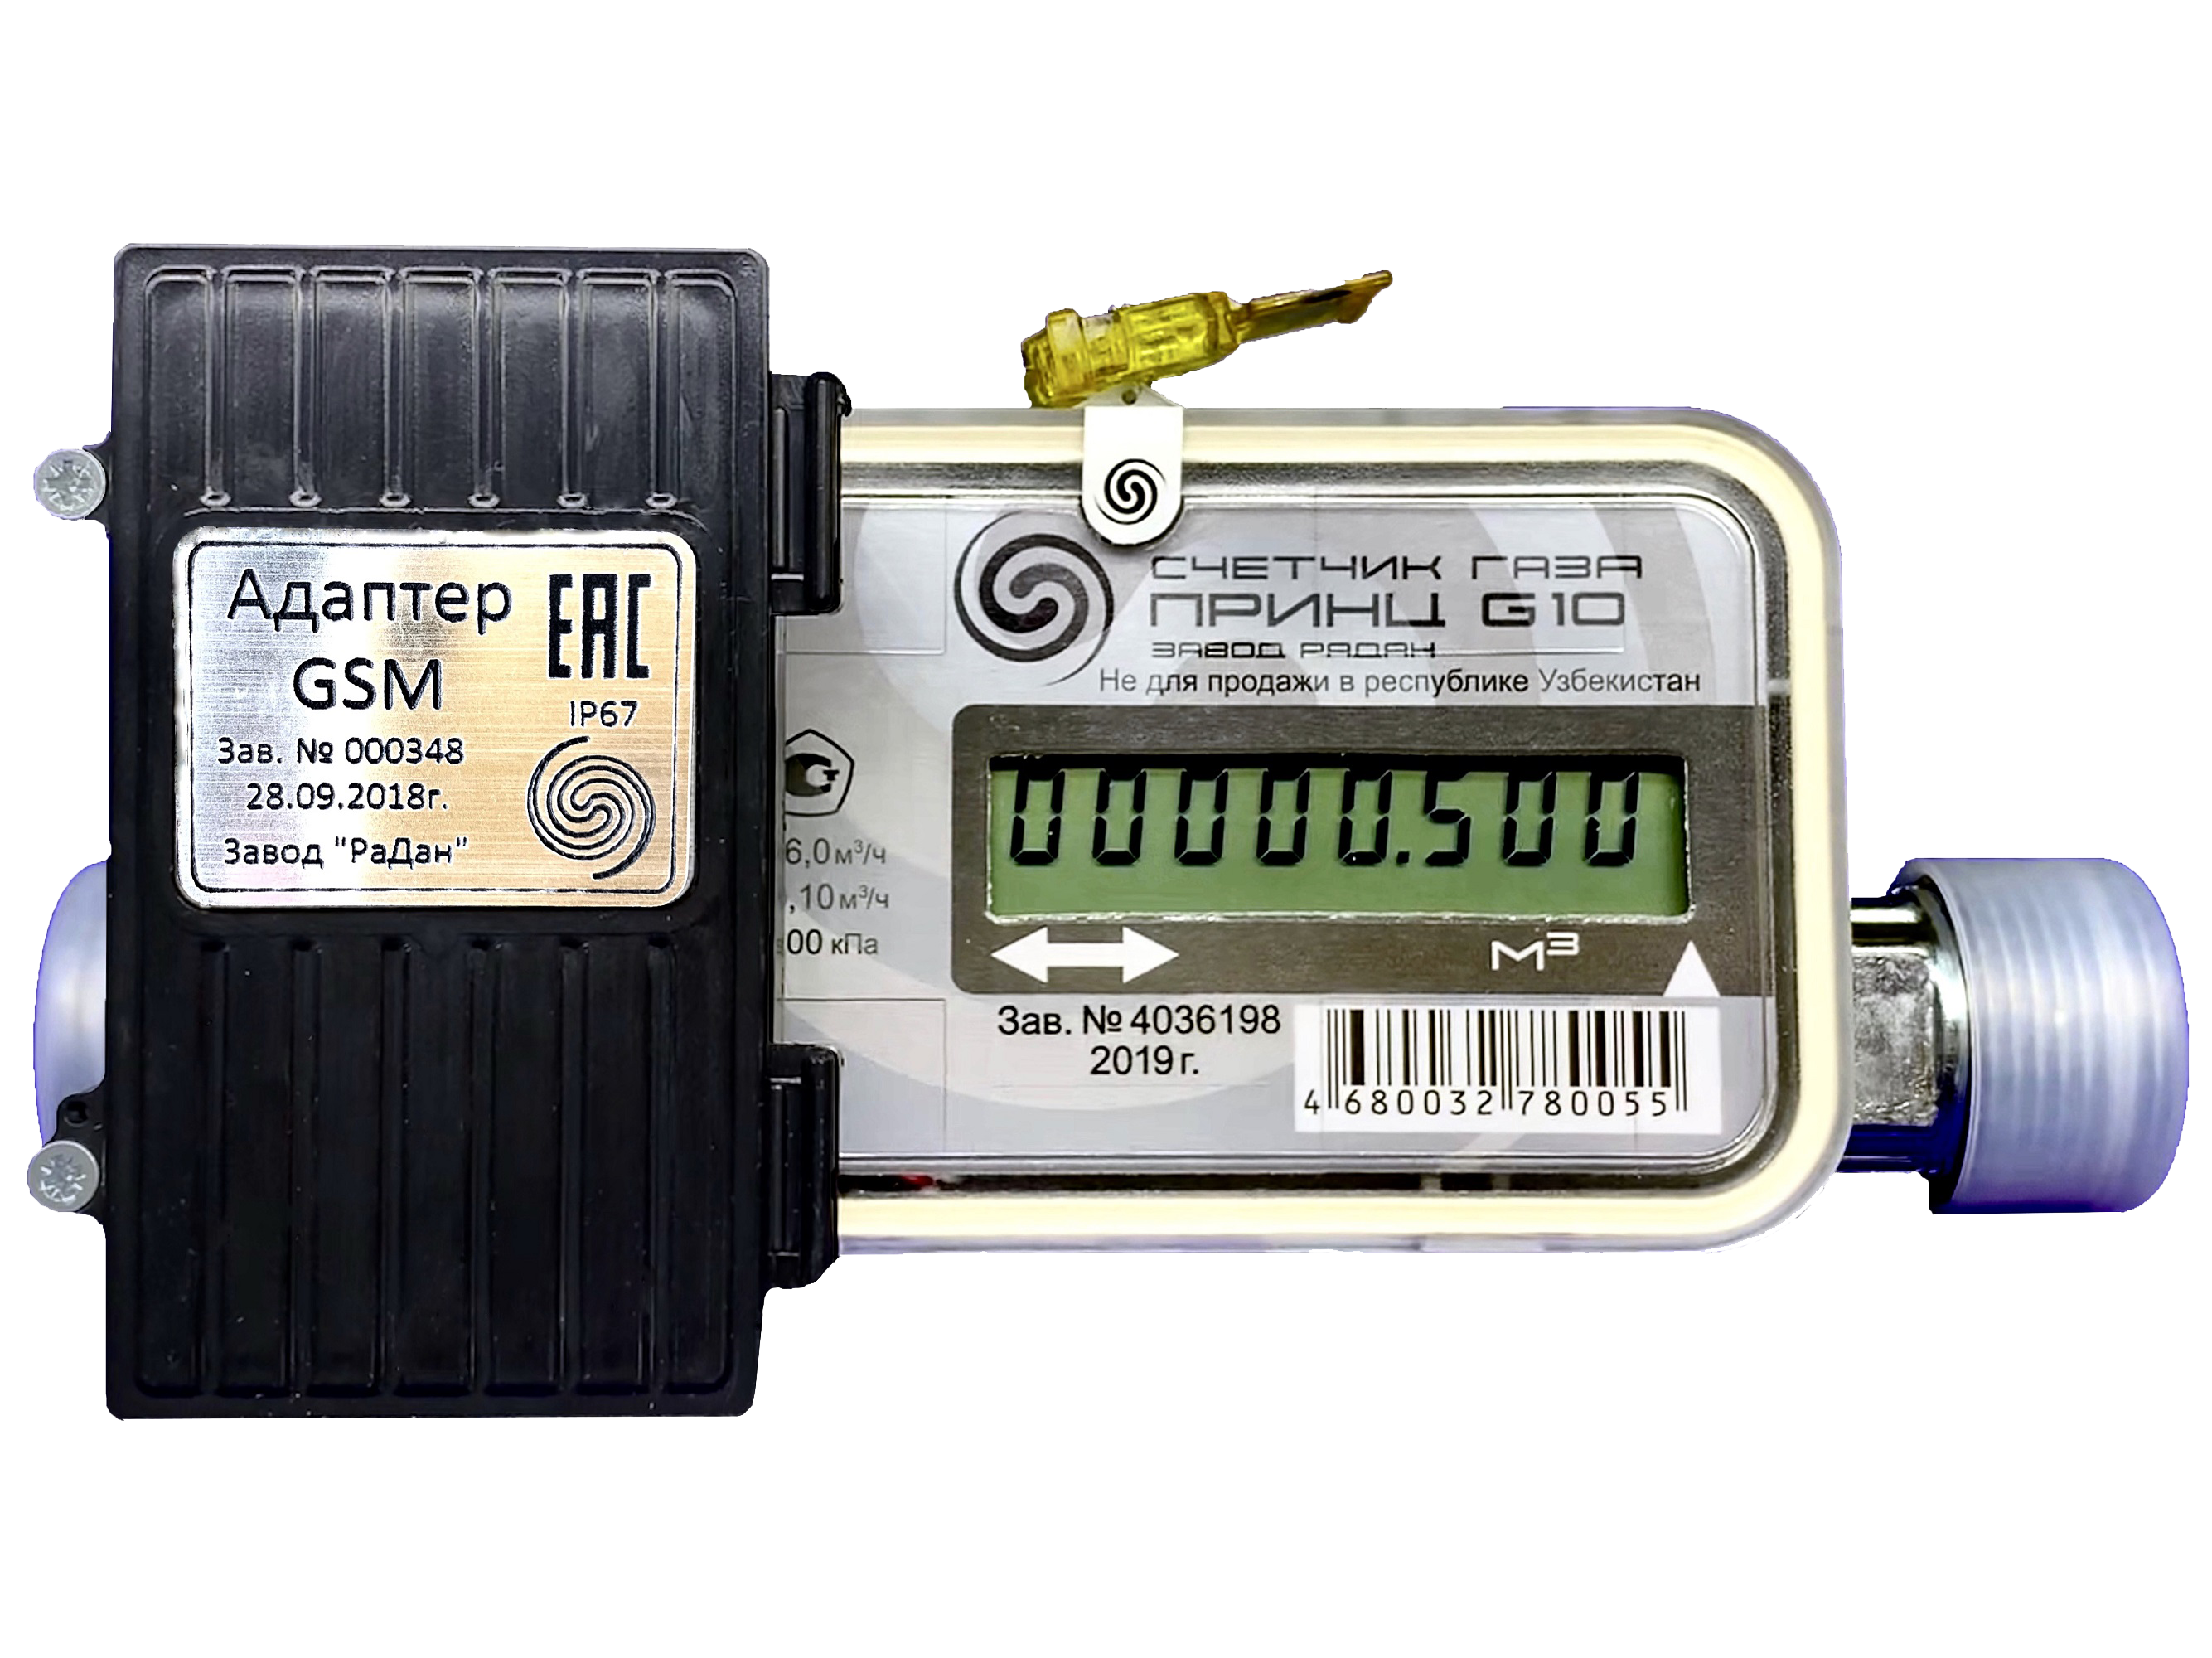 Газ gsm. Адаптер GSM для газового счетчика принц. Адаптер GSM acs5014 для газового счетчика принц. Счетчики газа принц м g25 с адаптером GSM. Газовый счетчик принц g10.